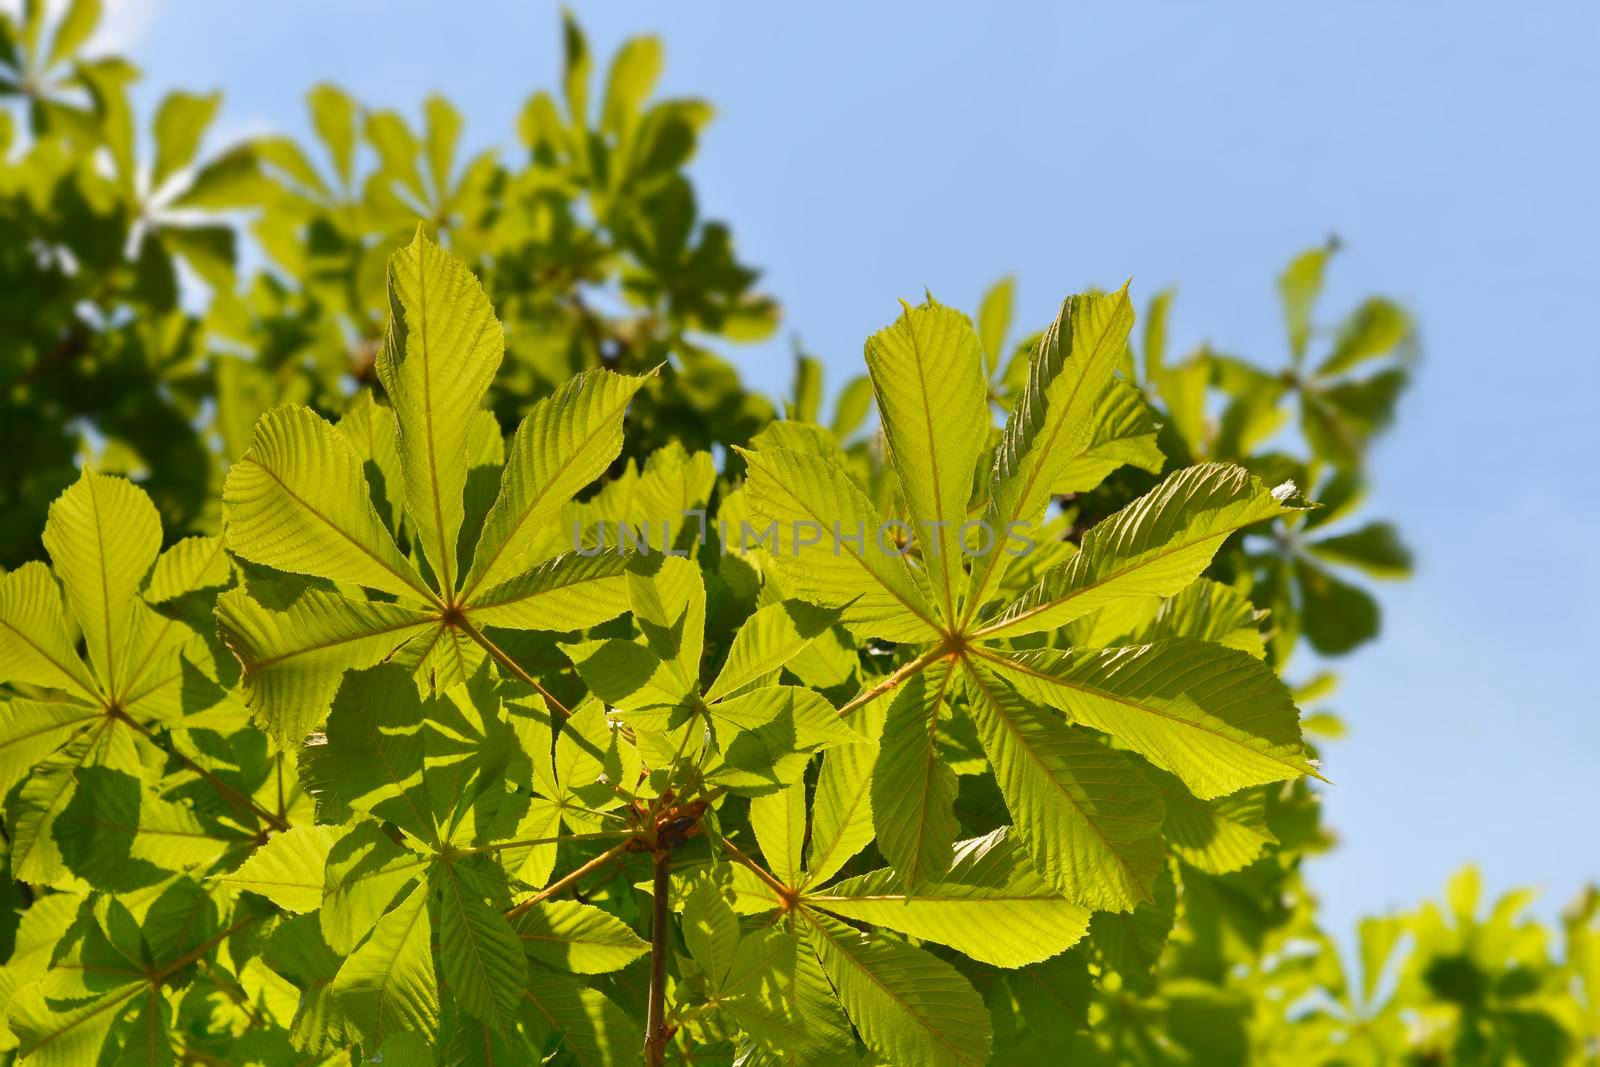 Common horse chestnut new leaves - Latin name - Aesculus hippocastanum